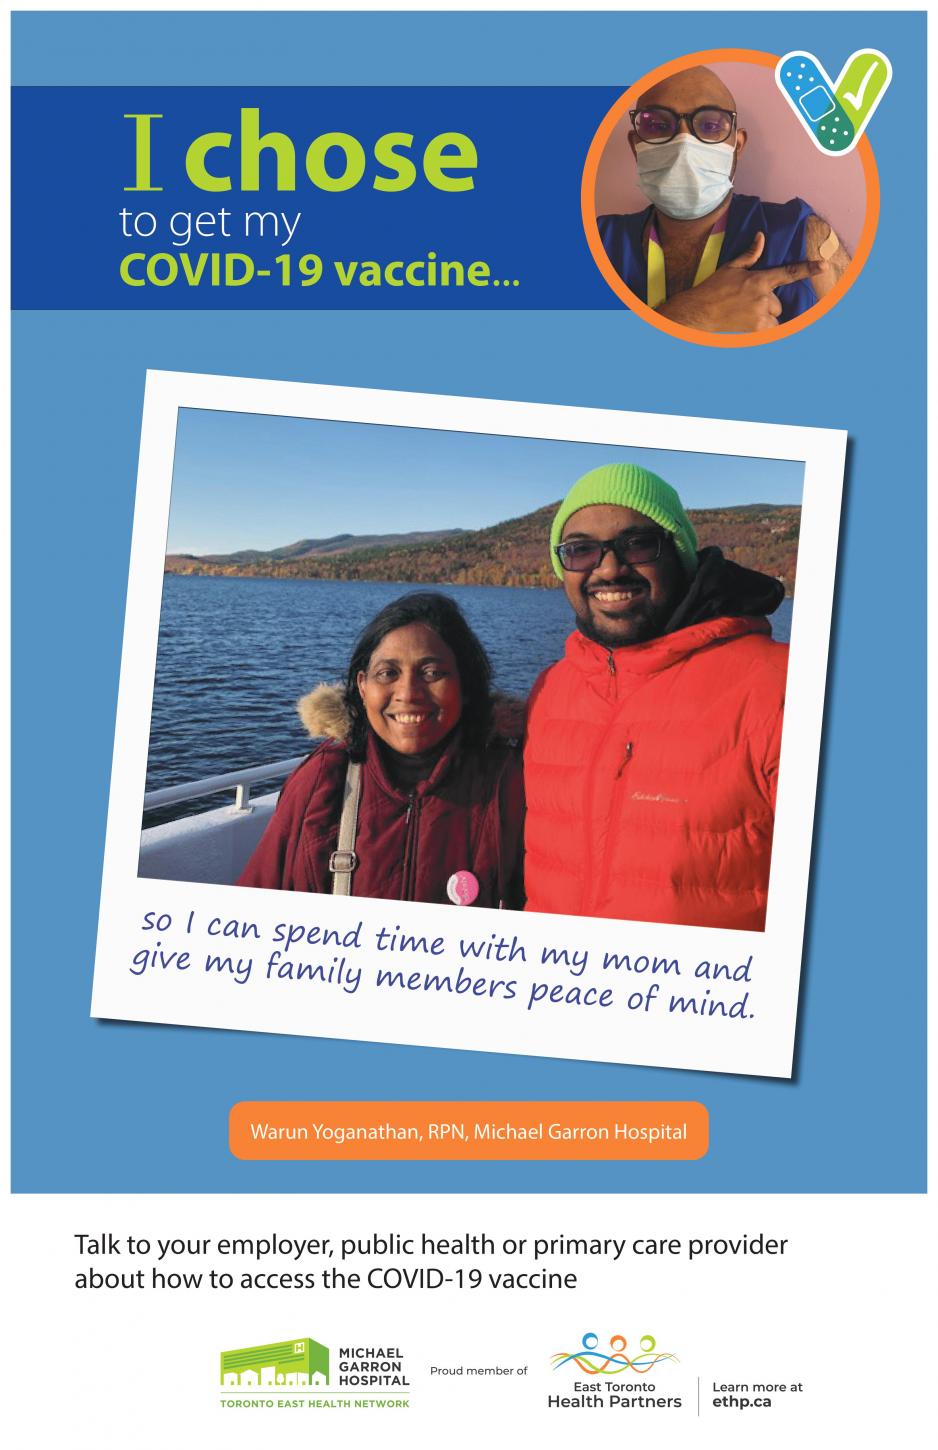 Warun Yoganathan, RPN at MGH, shares his reason for choosing to receive the COVID-19 vaccine.